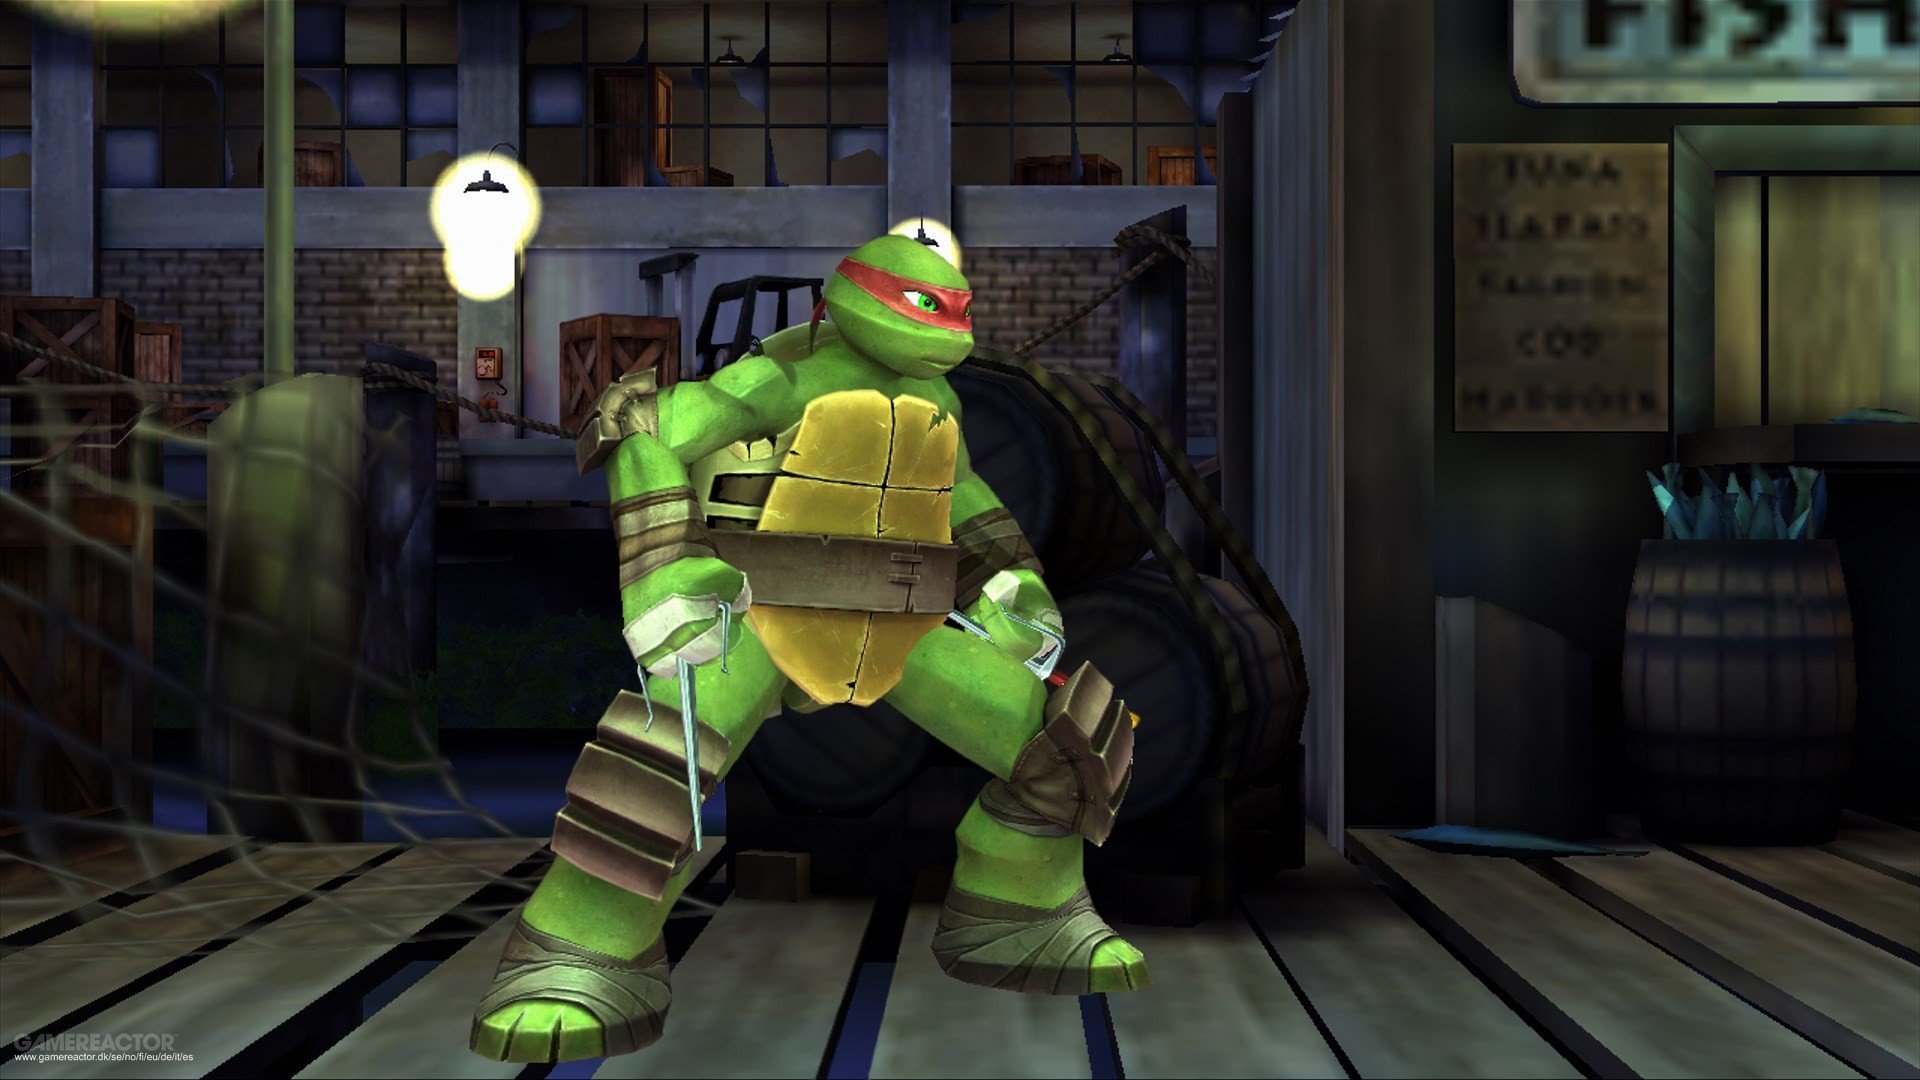 Адидас черепашки ниндзя. Mutant Ninja Turtles игра. Teenage Mutant Ninja Turtles игра 2007. Черепашки ниндзя Xbox 360. Teenage Mutant Ninja Turtles (игра, 2003).